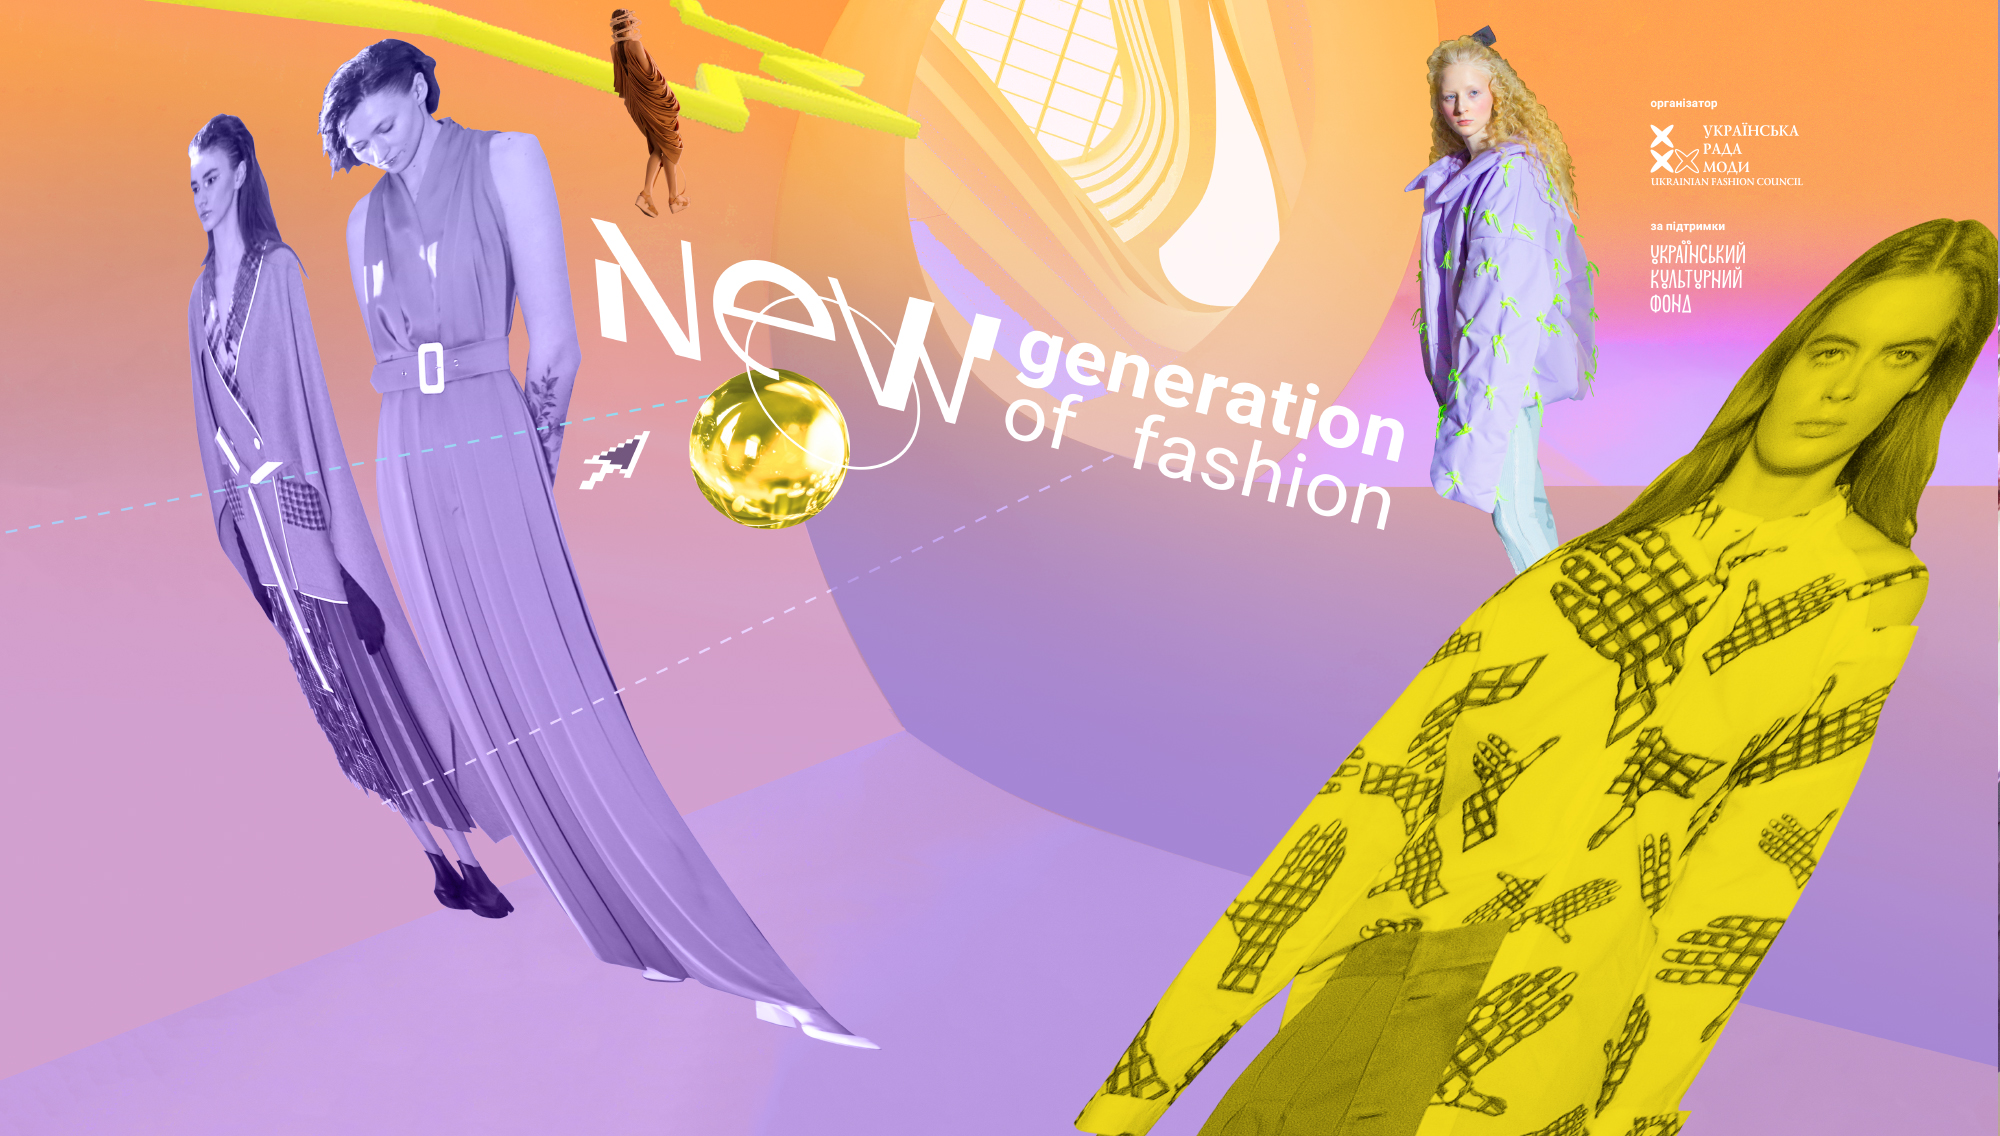 The New Generation of Fashion mentoring program